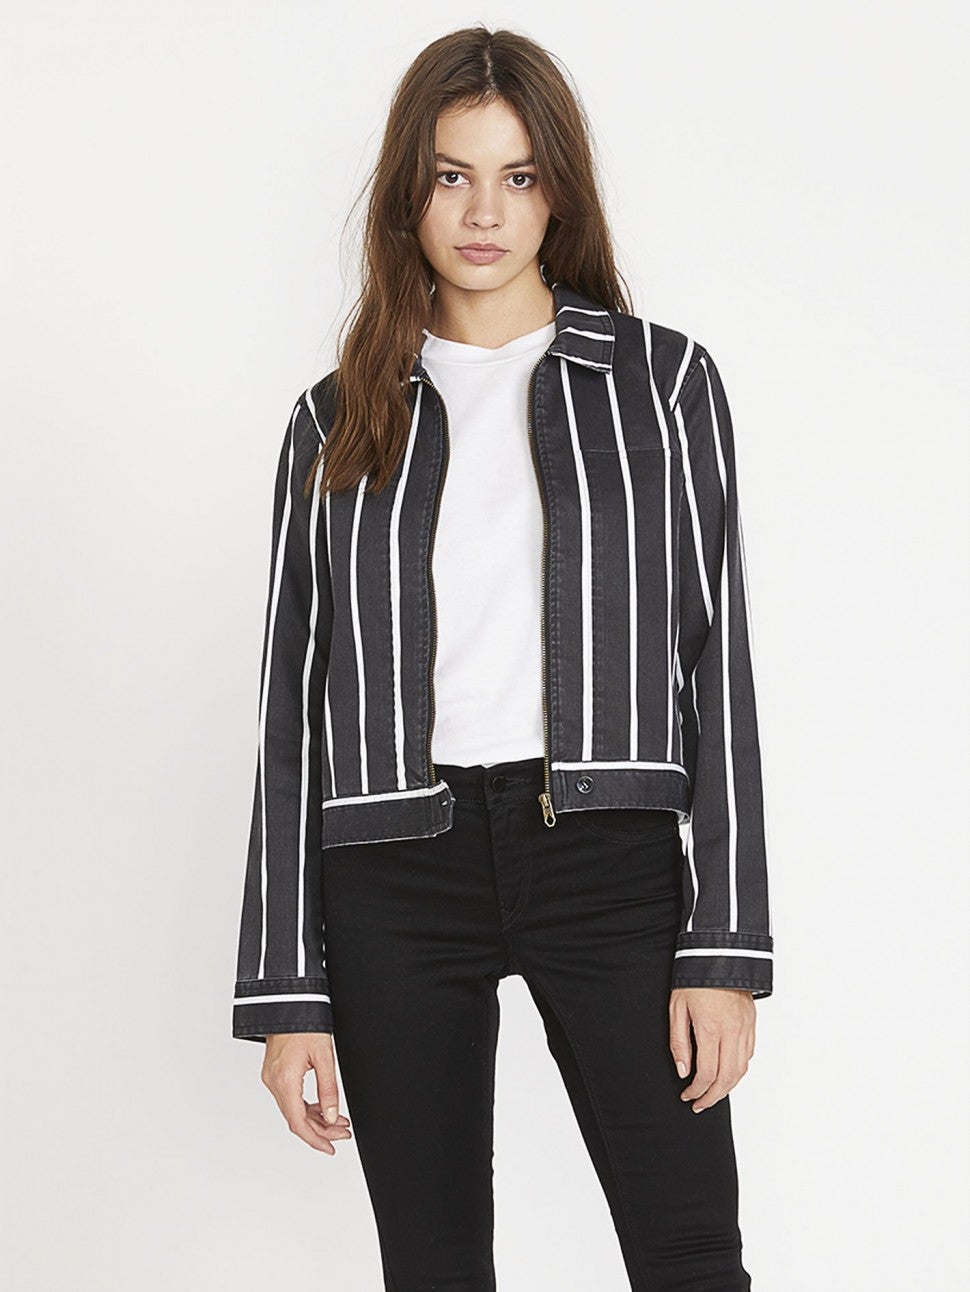 Volcom striped jacket